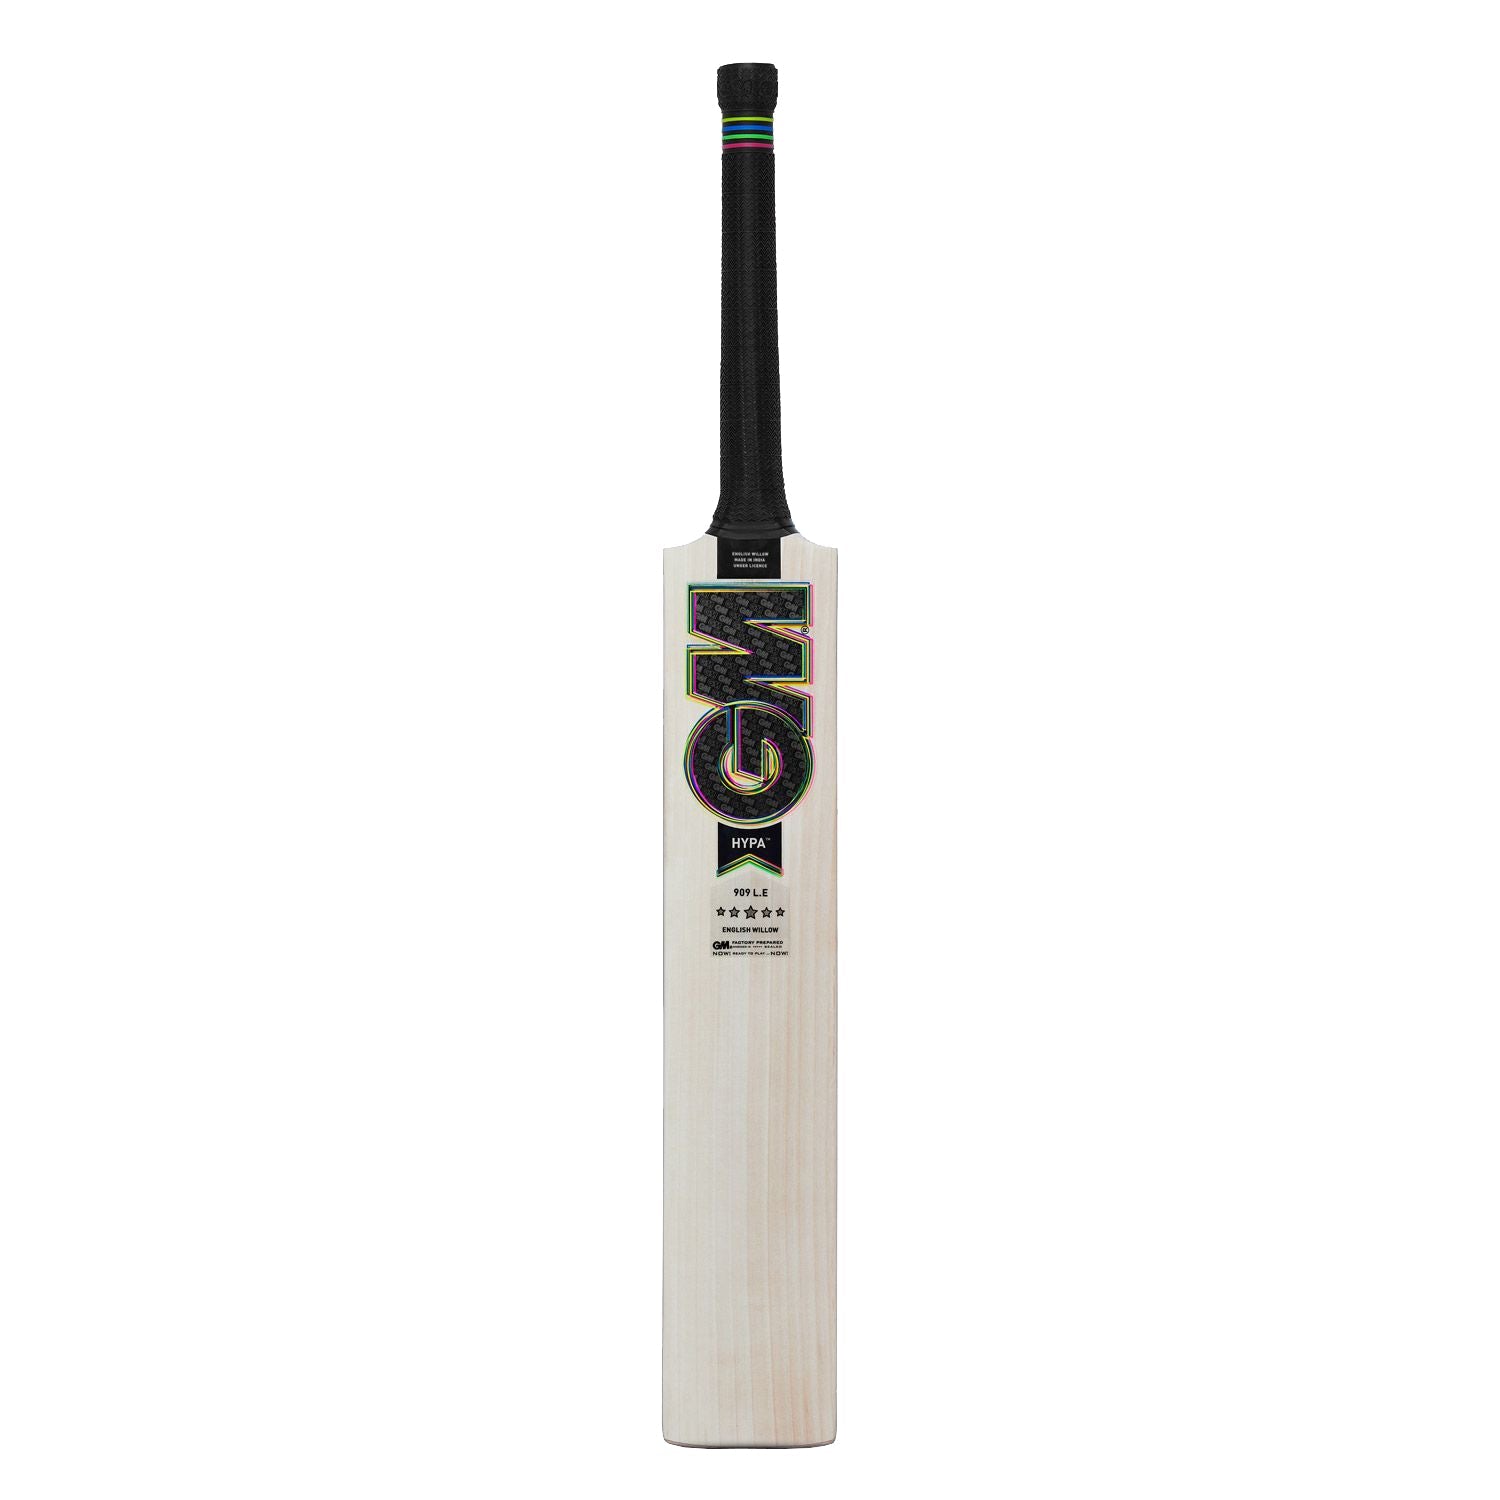 Gunn & Moore GM Hypa 909 Limited Edition Cricket Bat - Senior